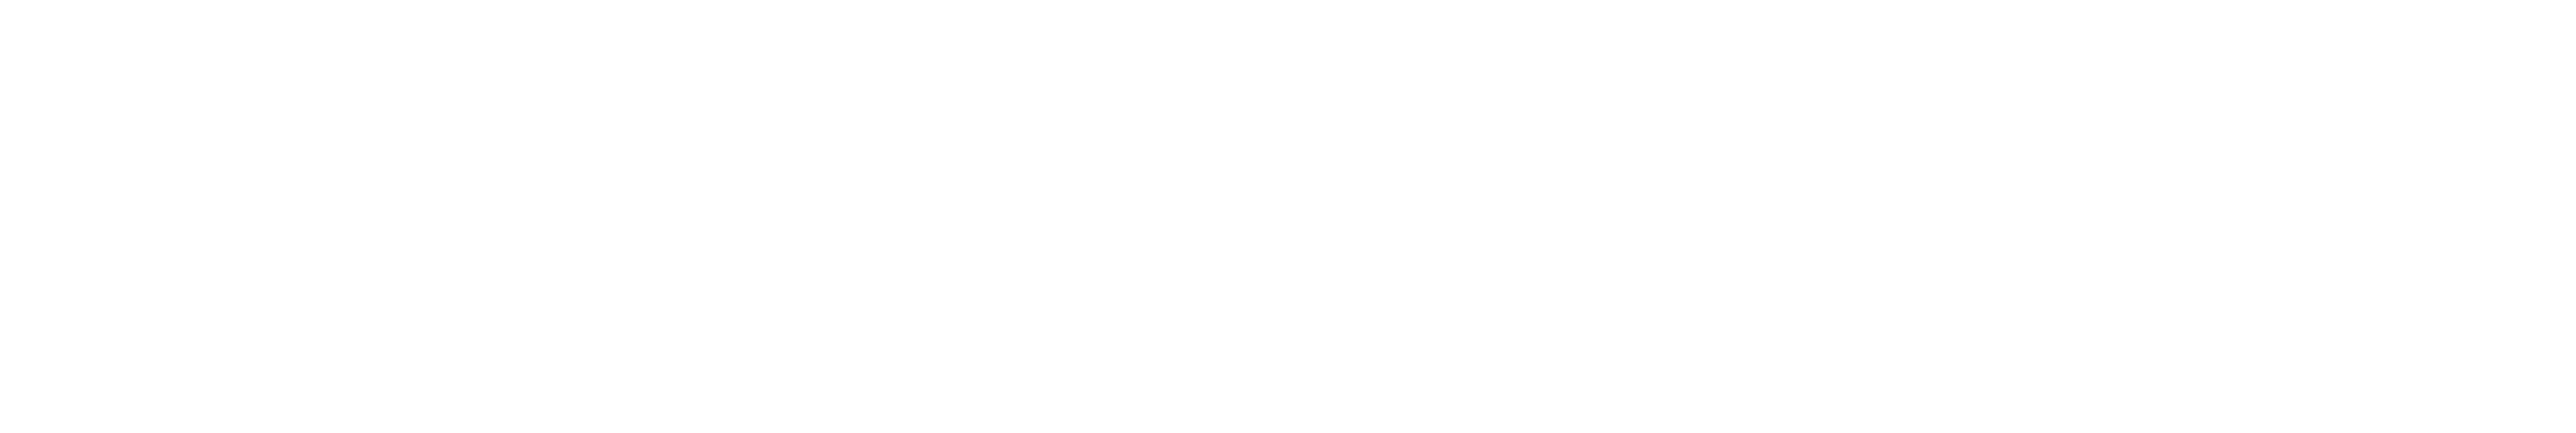 v1-FutureBridge_Logotype_White_RGB-1